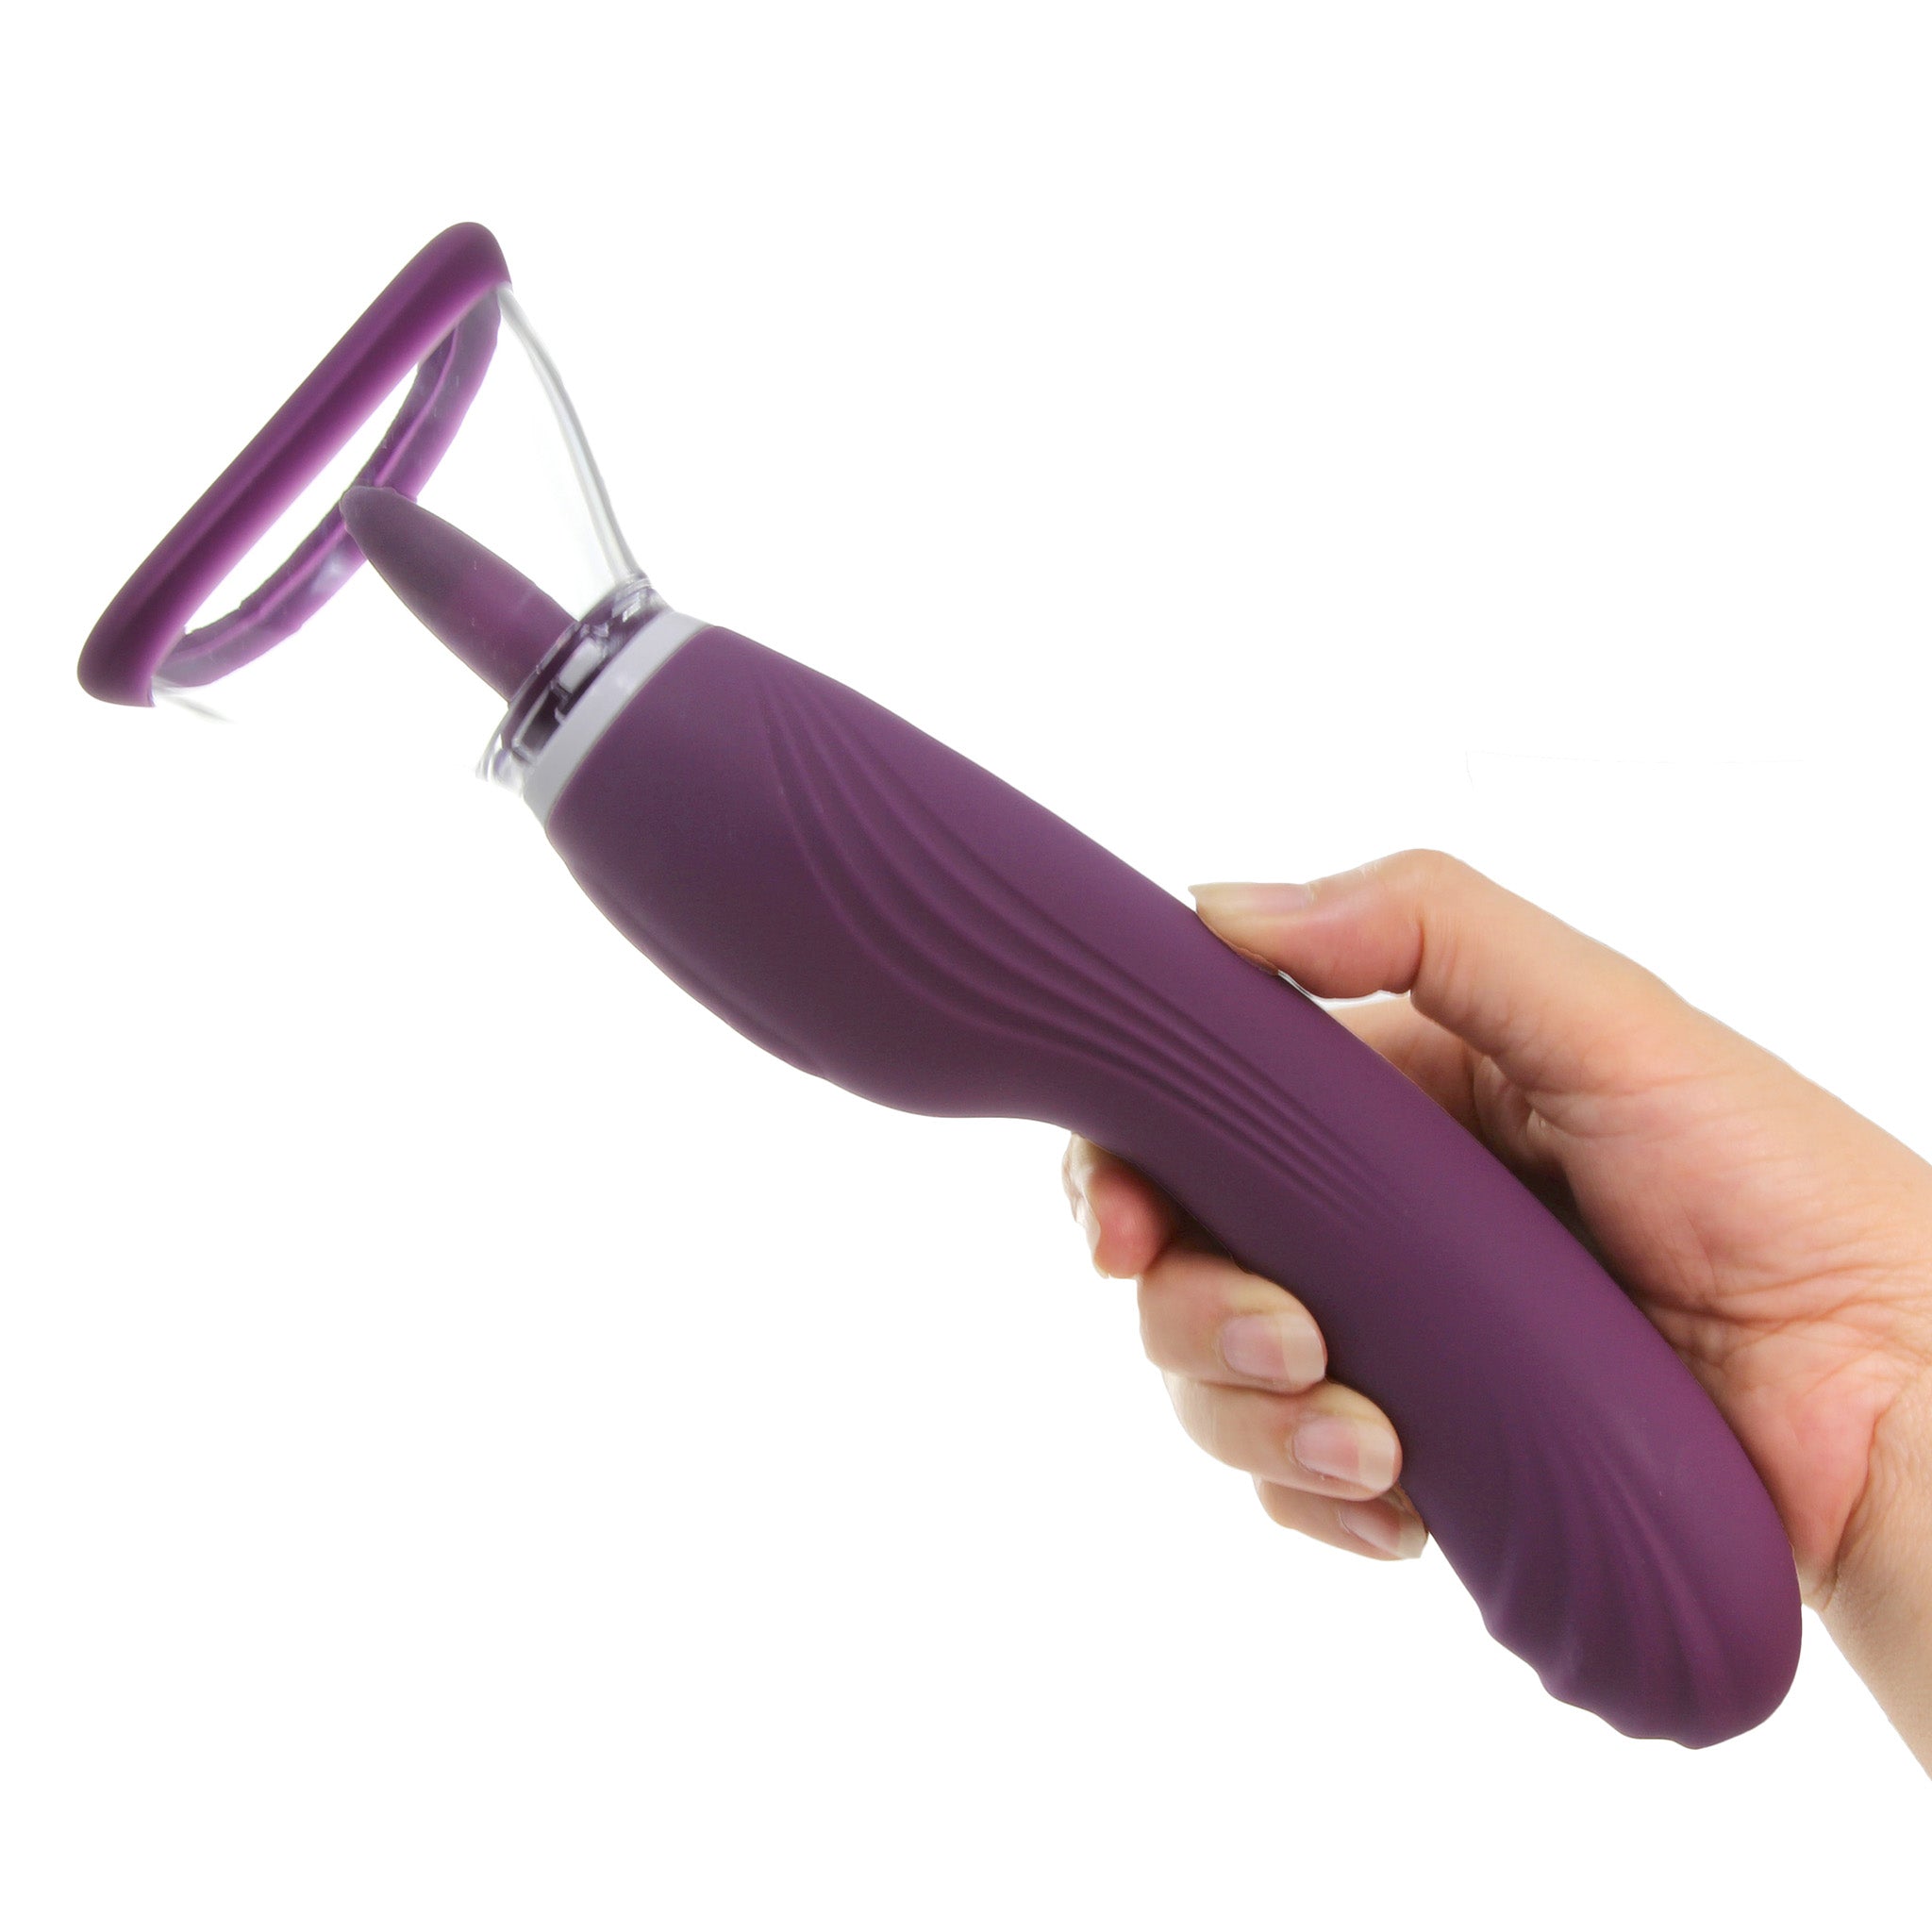 Oral Sex Clit Licking Sucking Vaginal Pussy Pump Anal G-spot Vibrator Stimulator